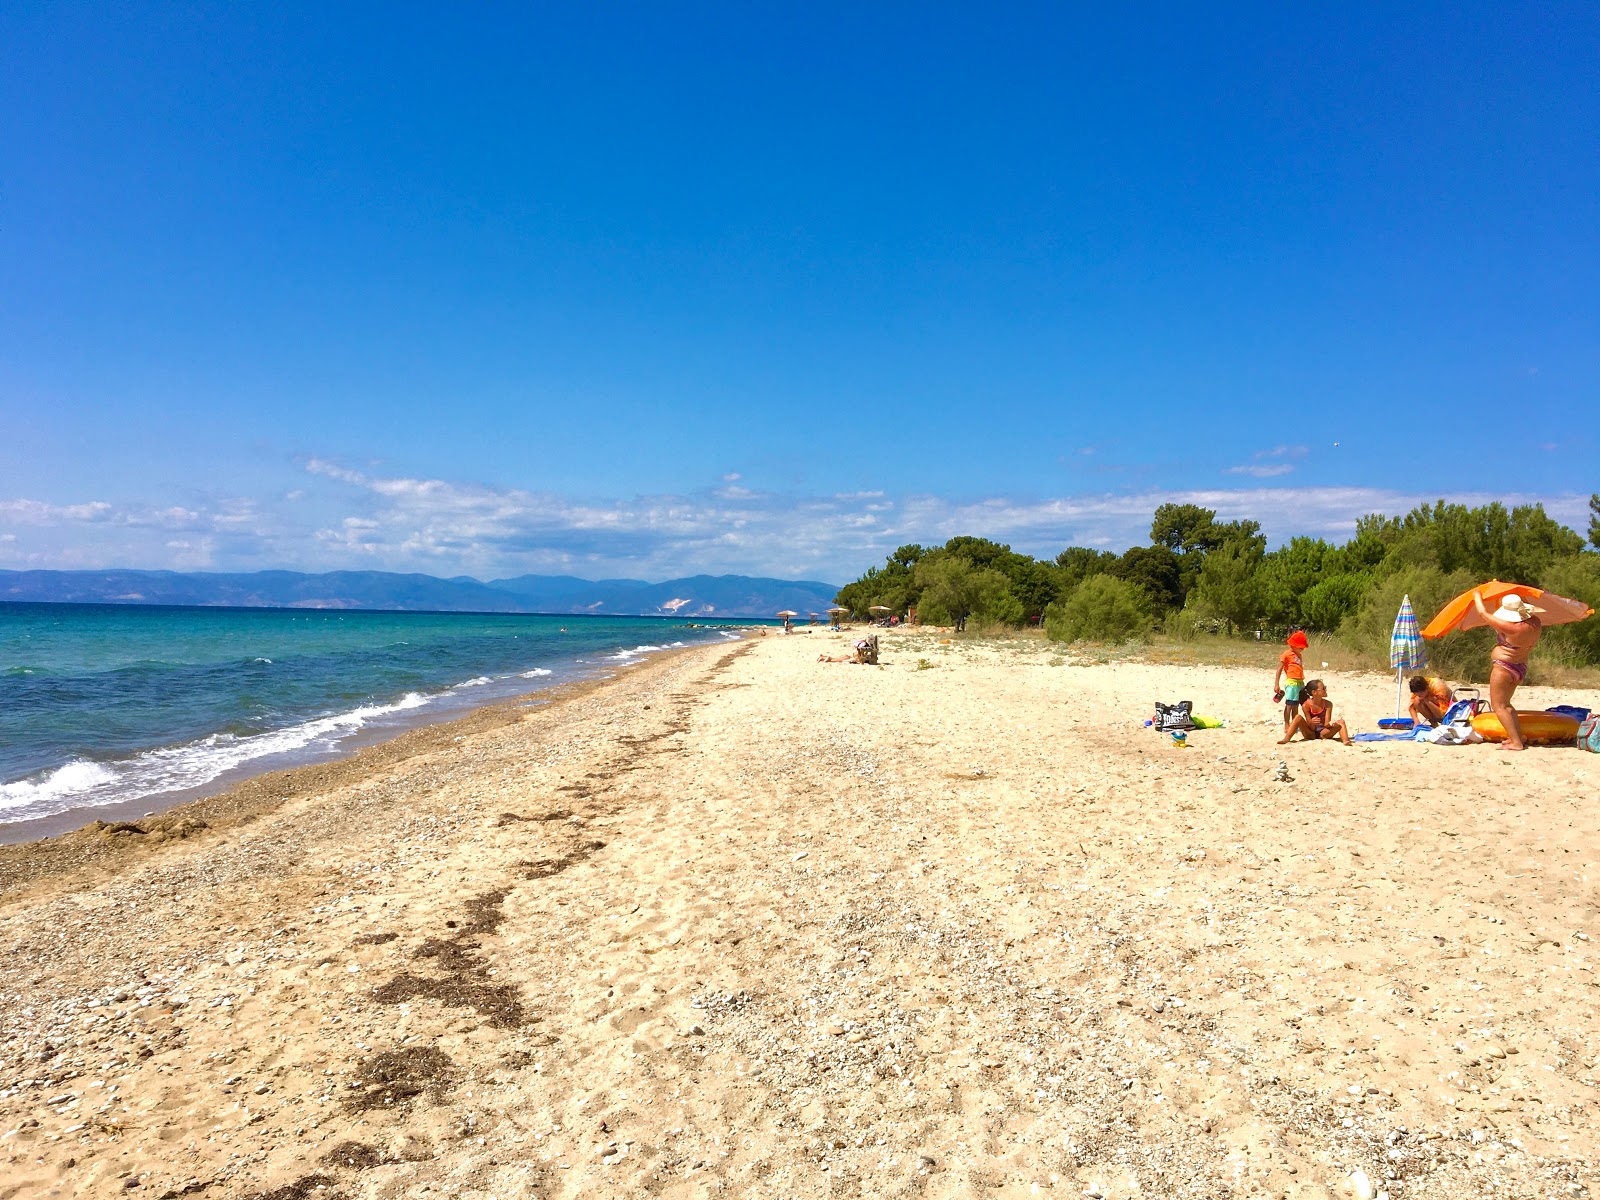 Fotografie cu Etisies beach cu nivelul de curățenie in medie